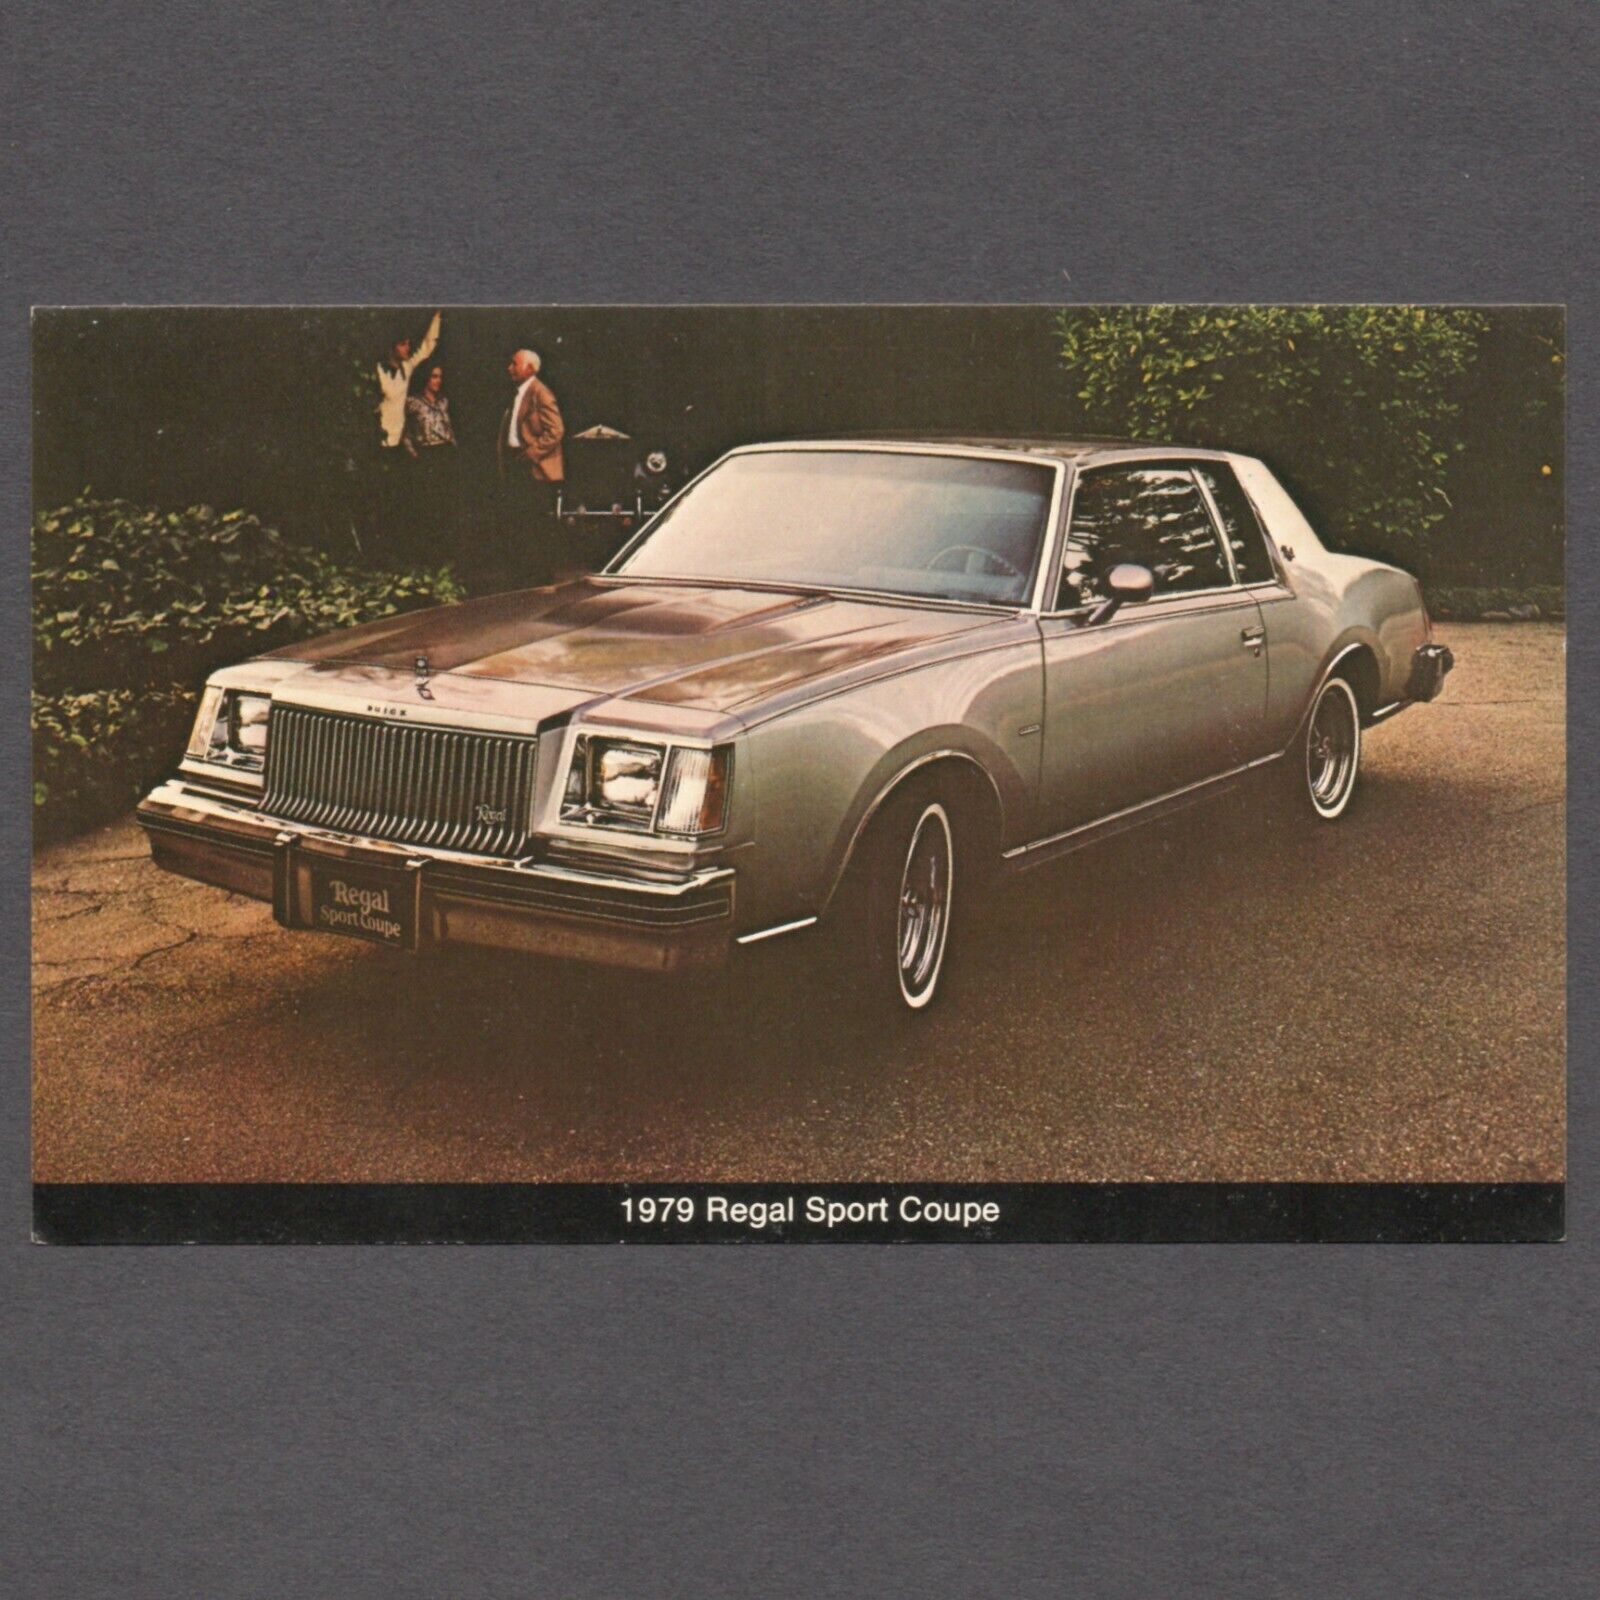 1979 Buick REGAL SPORT COUPE: Original Dealer Promotional Postcard UNUSED VG+